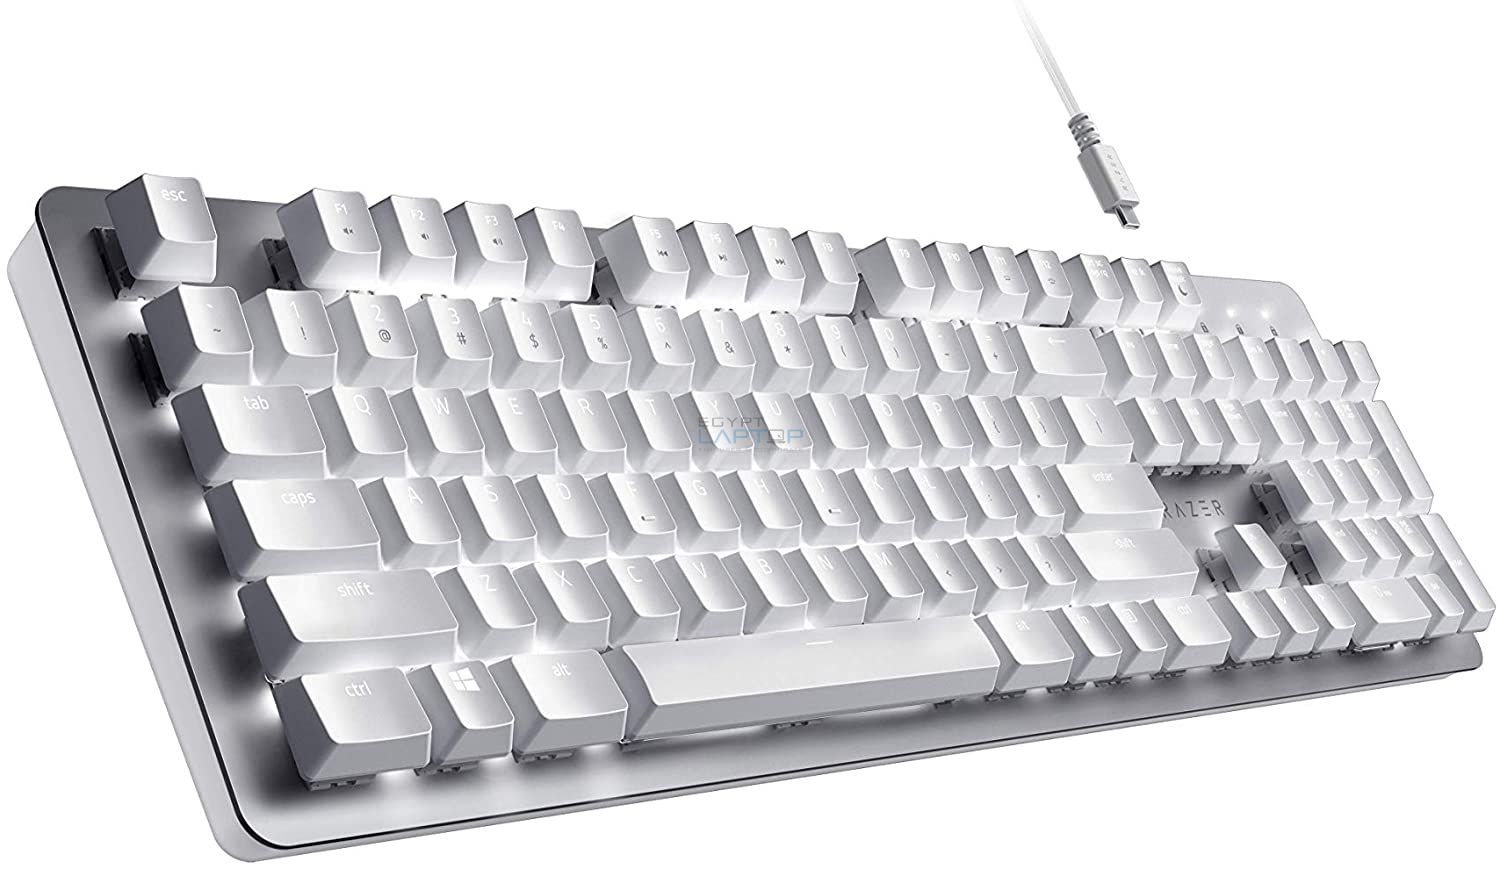 Razer white keyboard